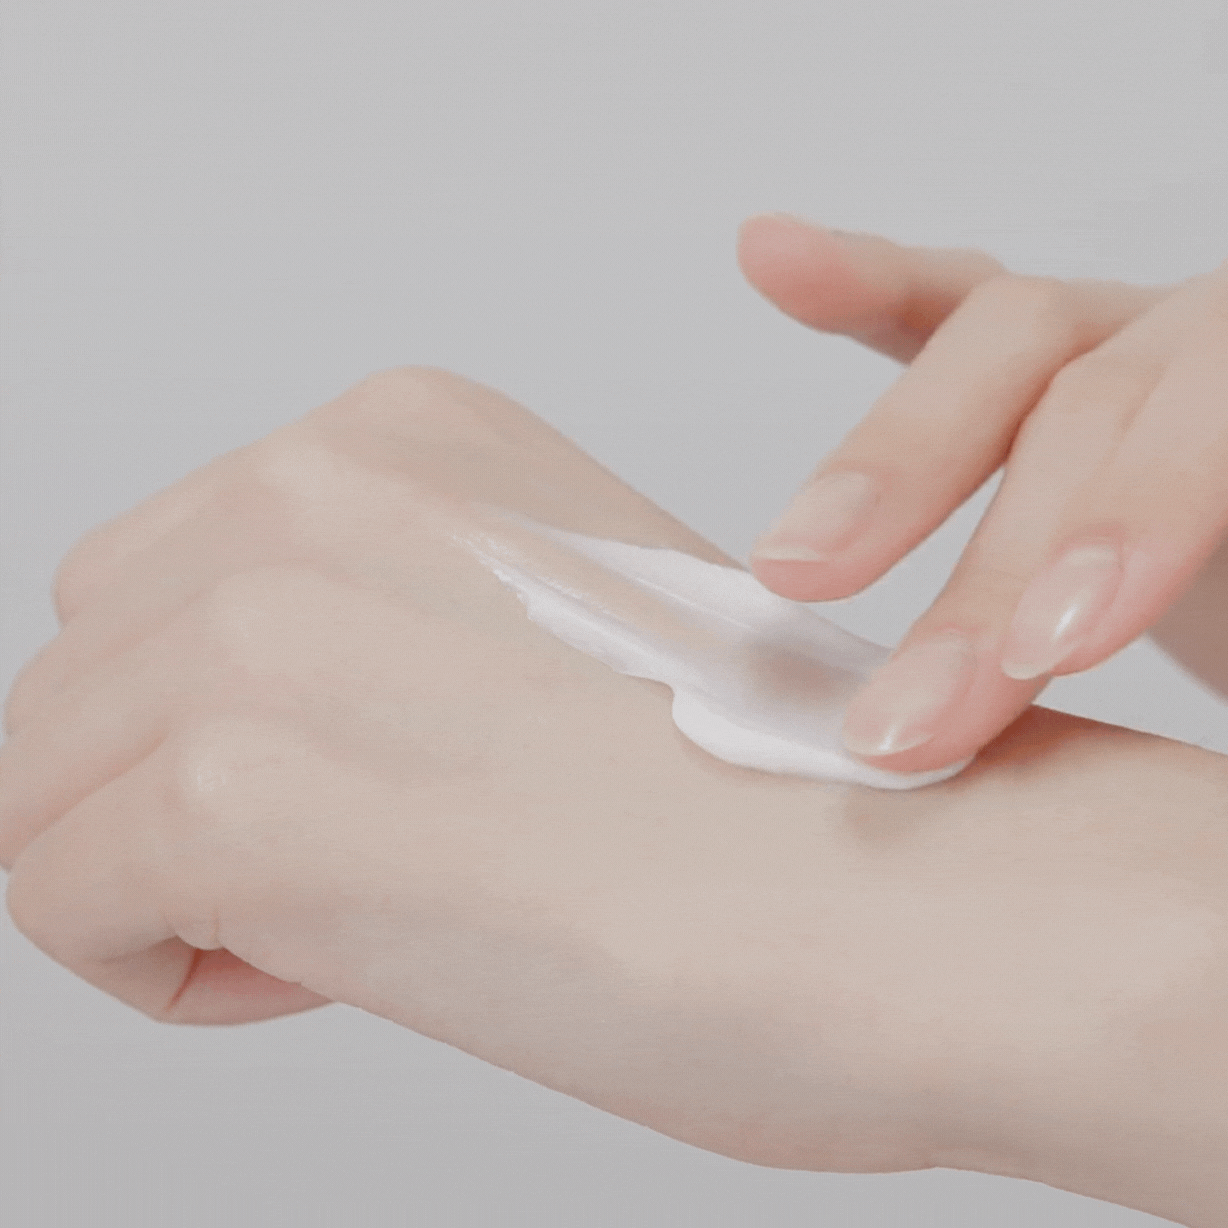 IUNIK Black Snail Restore Cream (60ml) application of product on the hand 